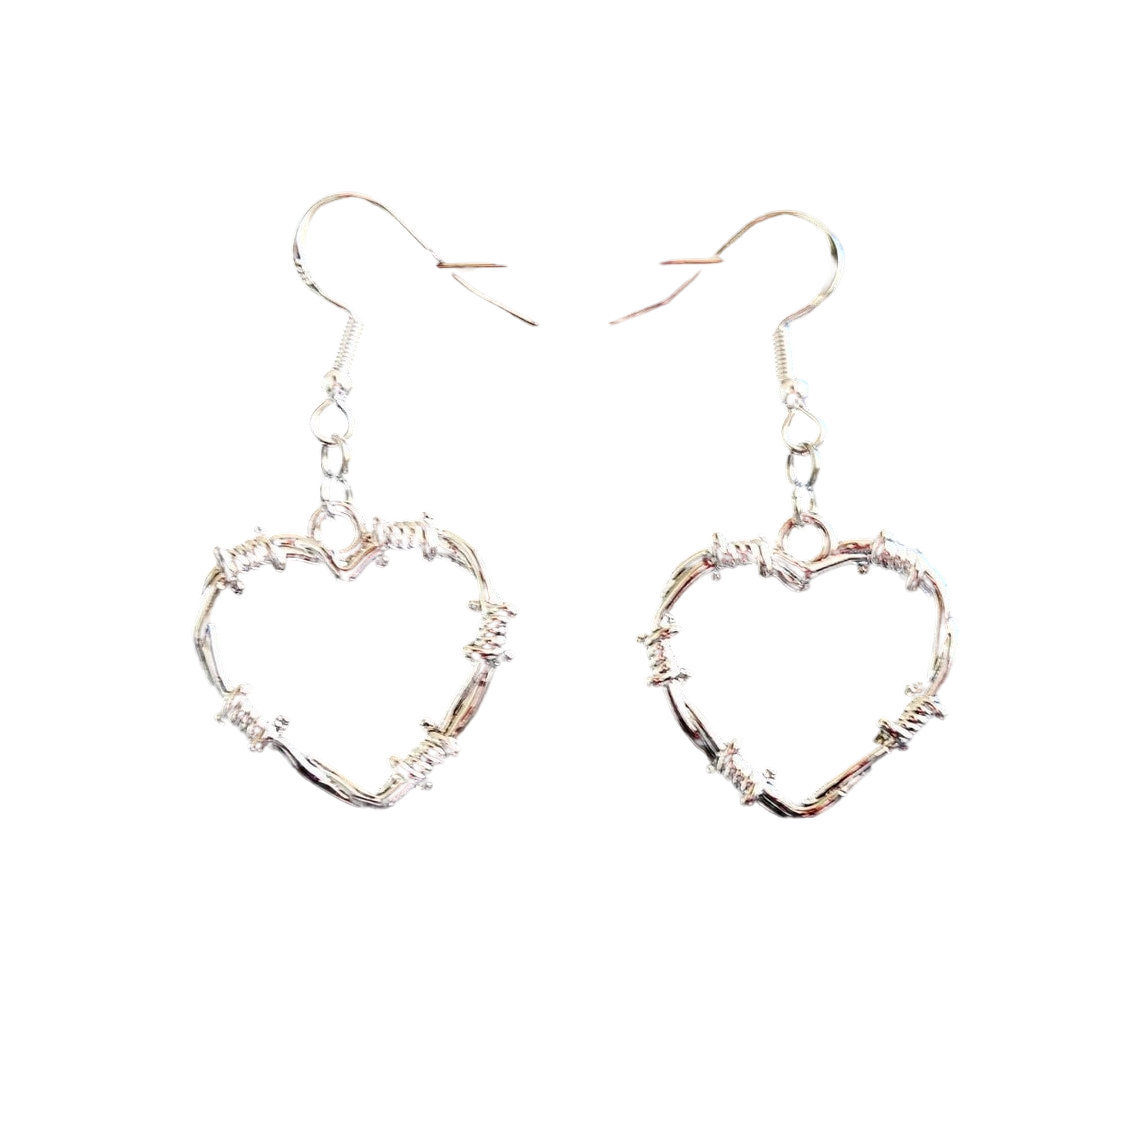 Alt earrings with heart shaped studs